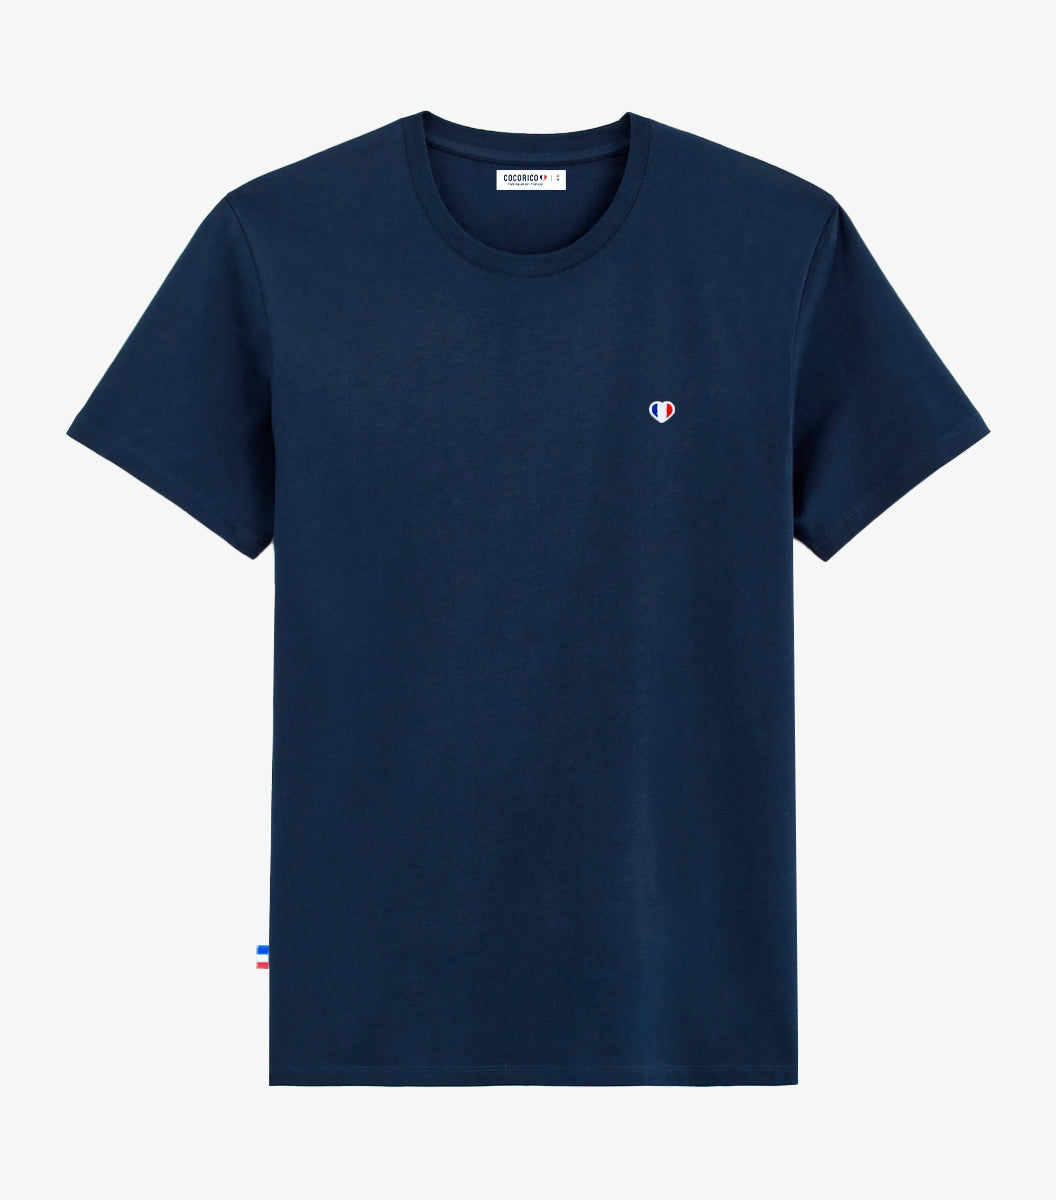 T-shirt Homme Marine - French Club